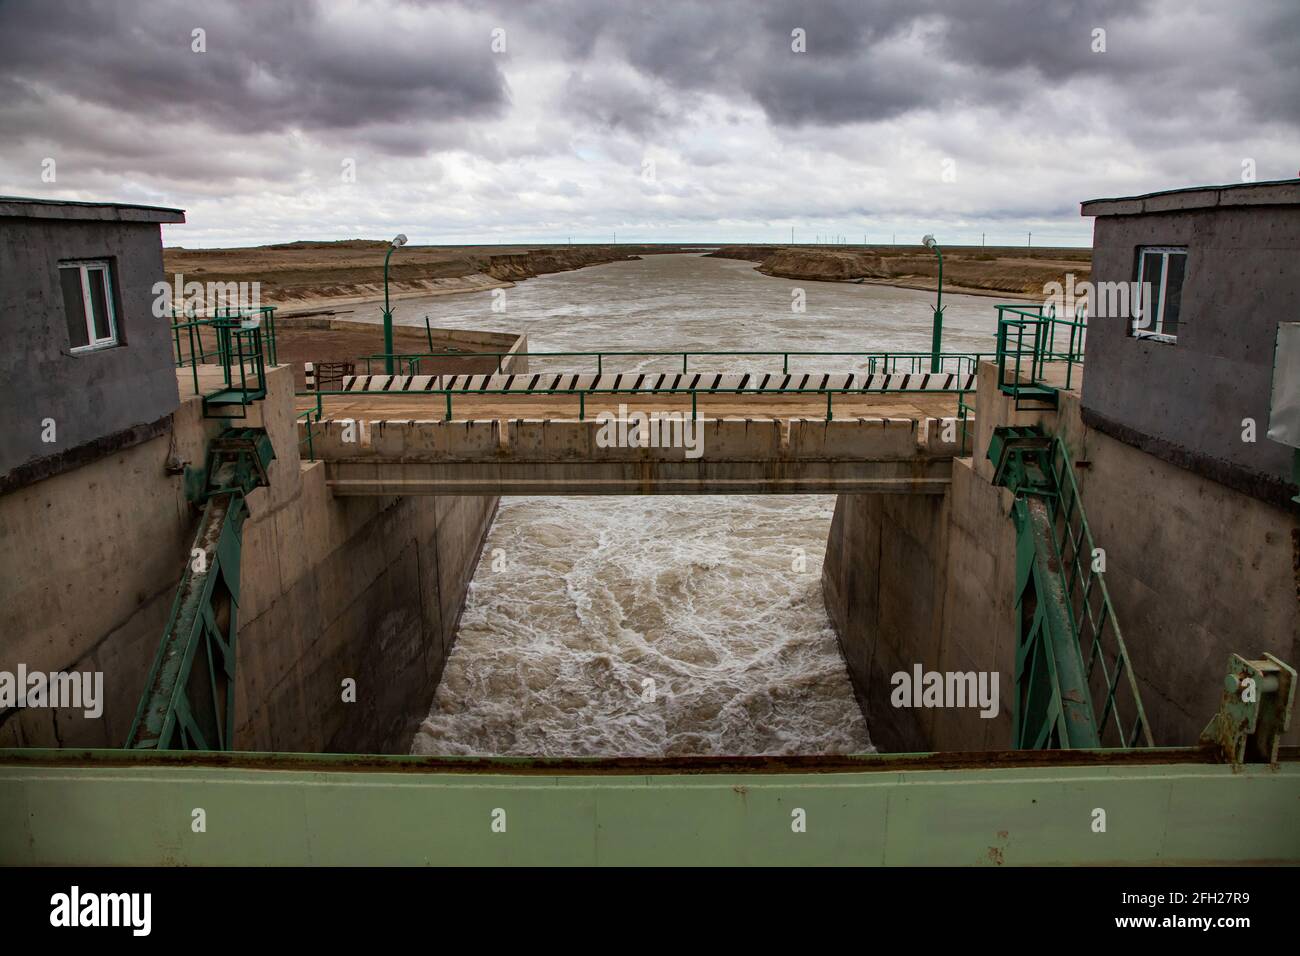 Aklak dam controls Shardara river's water level. Green metal shutter on front and bridge.Turbulent river water, grey storm clouds. Stock Photo